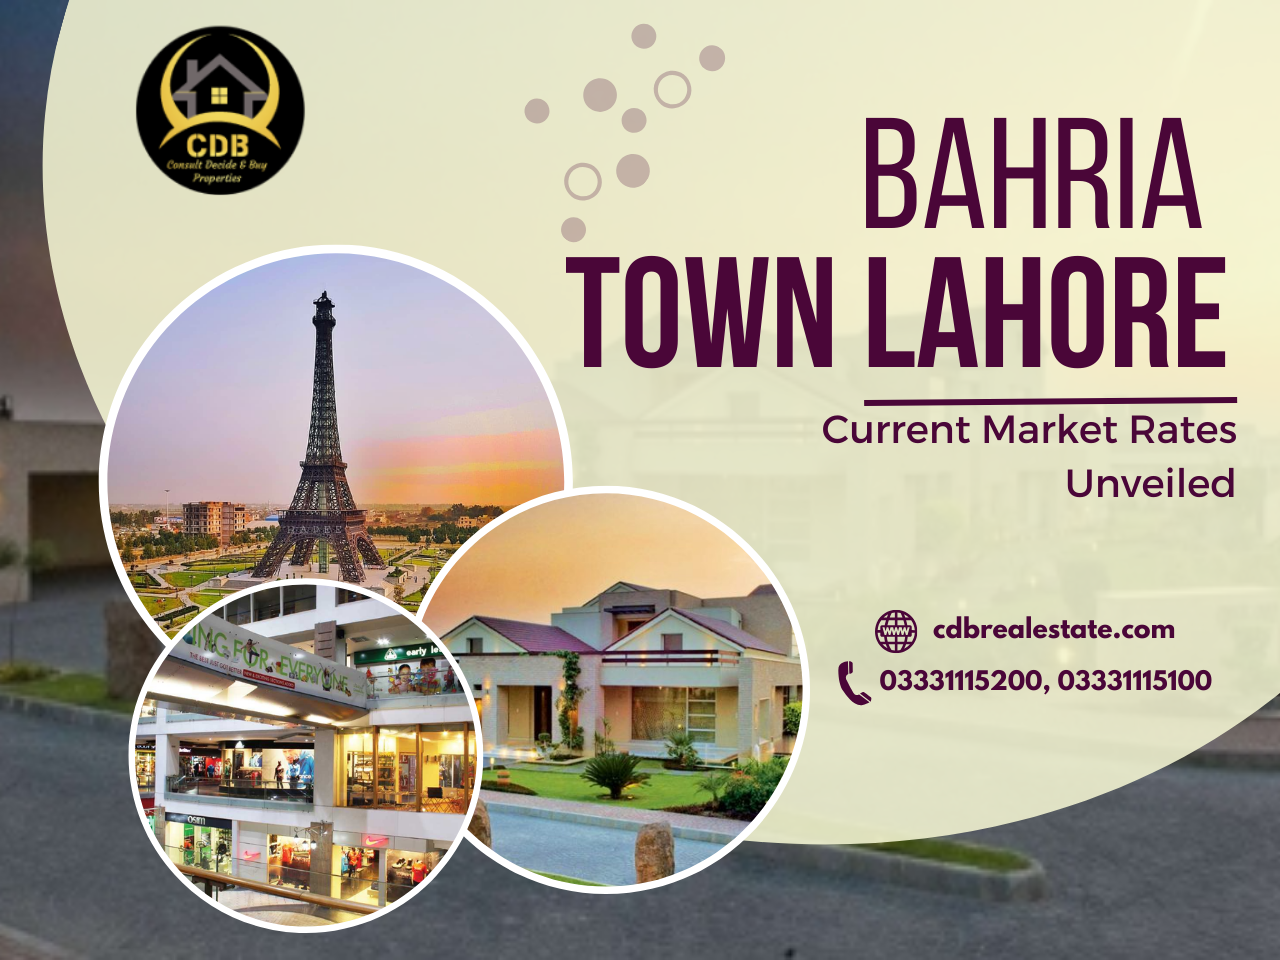 Bahria Town Lahore: Current Market Rates Unveiled